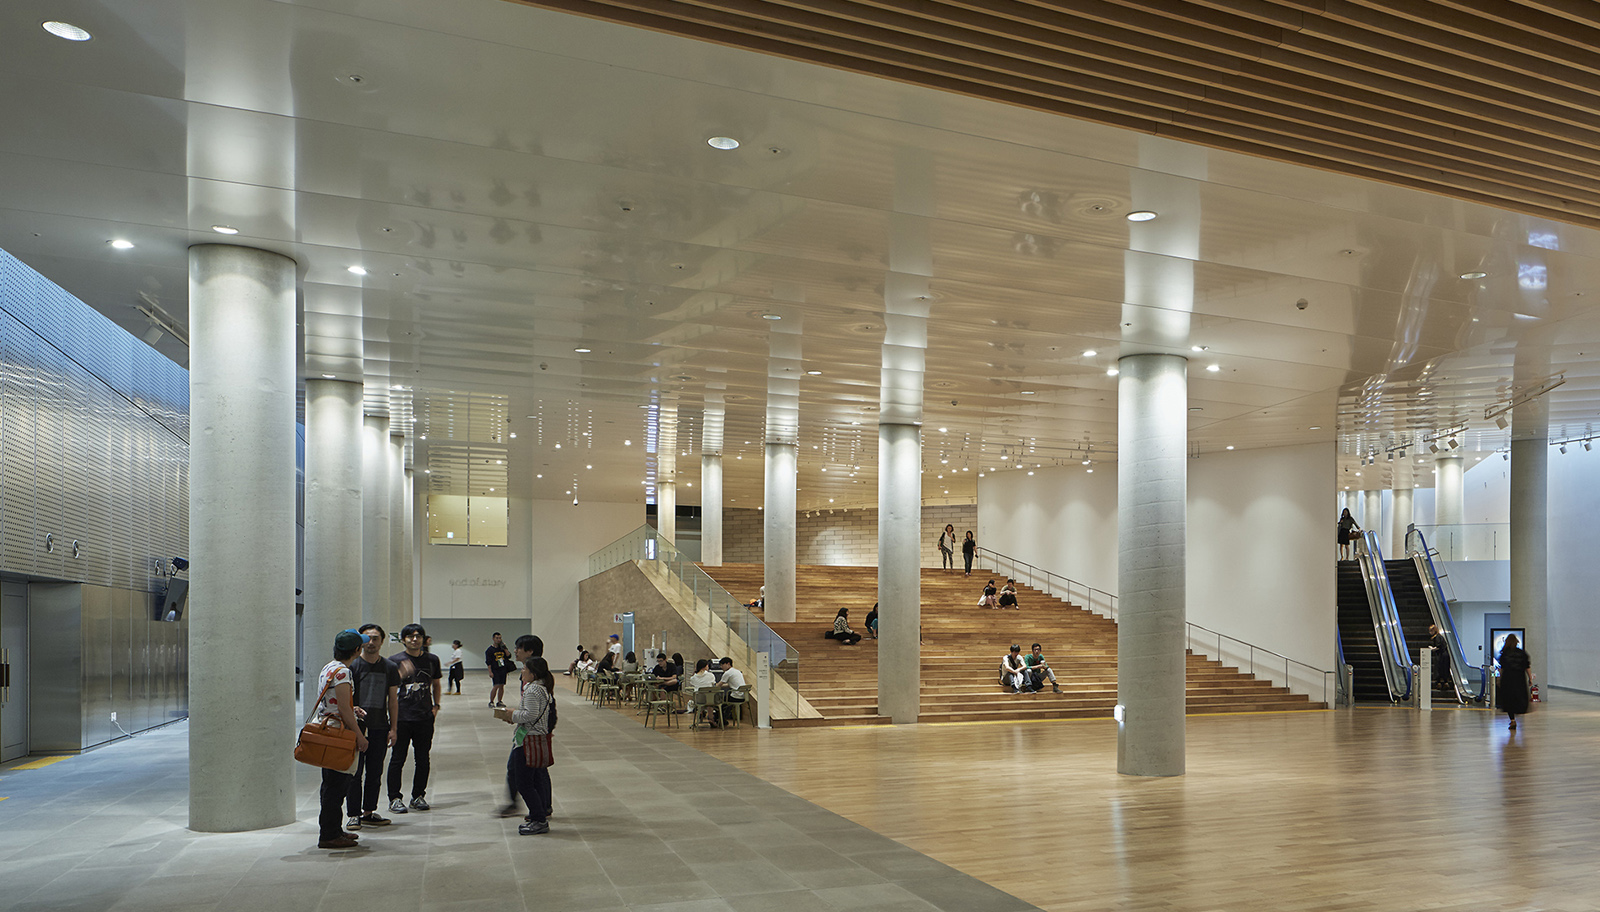 Asia Culture Center Interior atrium with stares and escalator